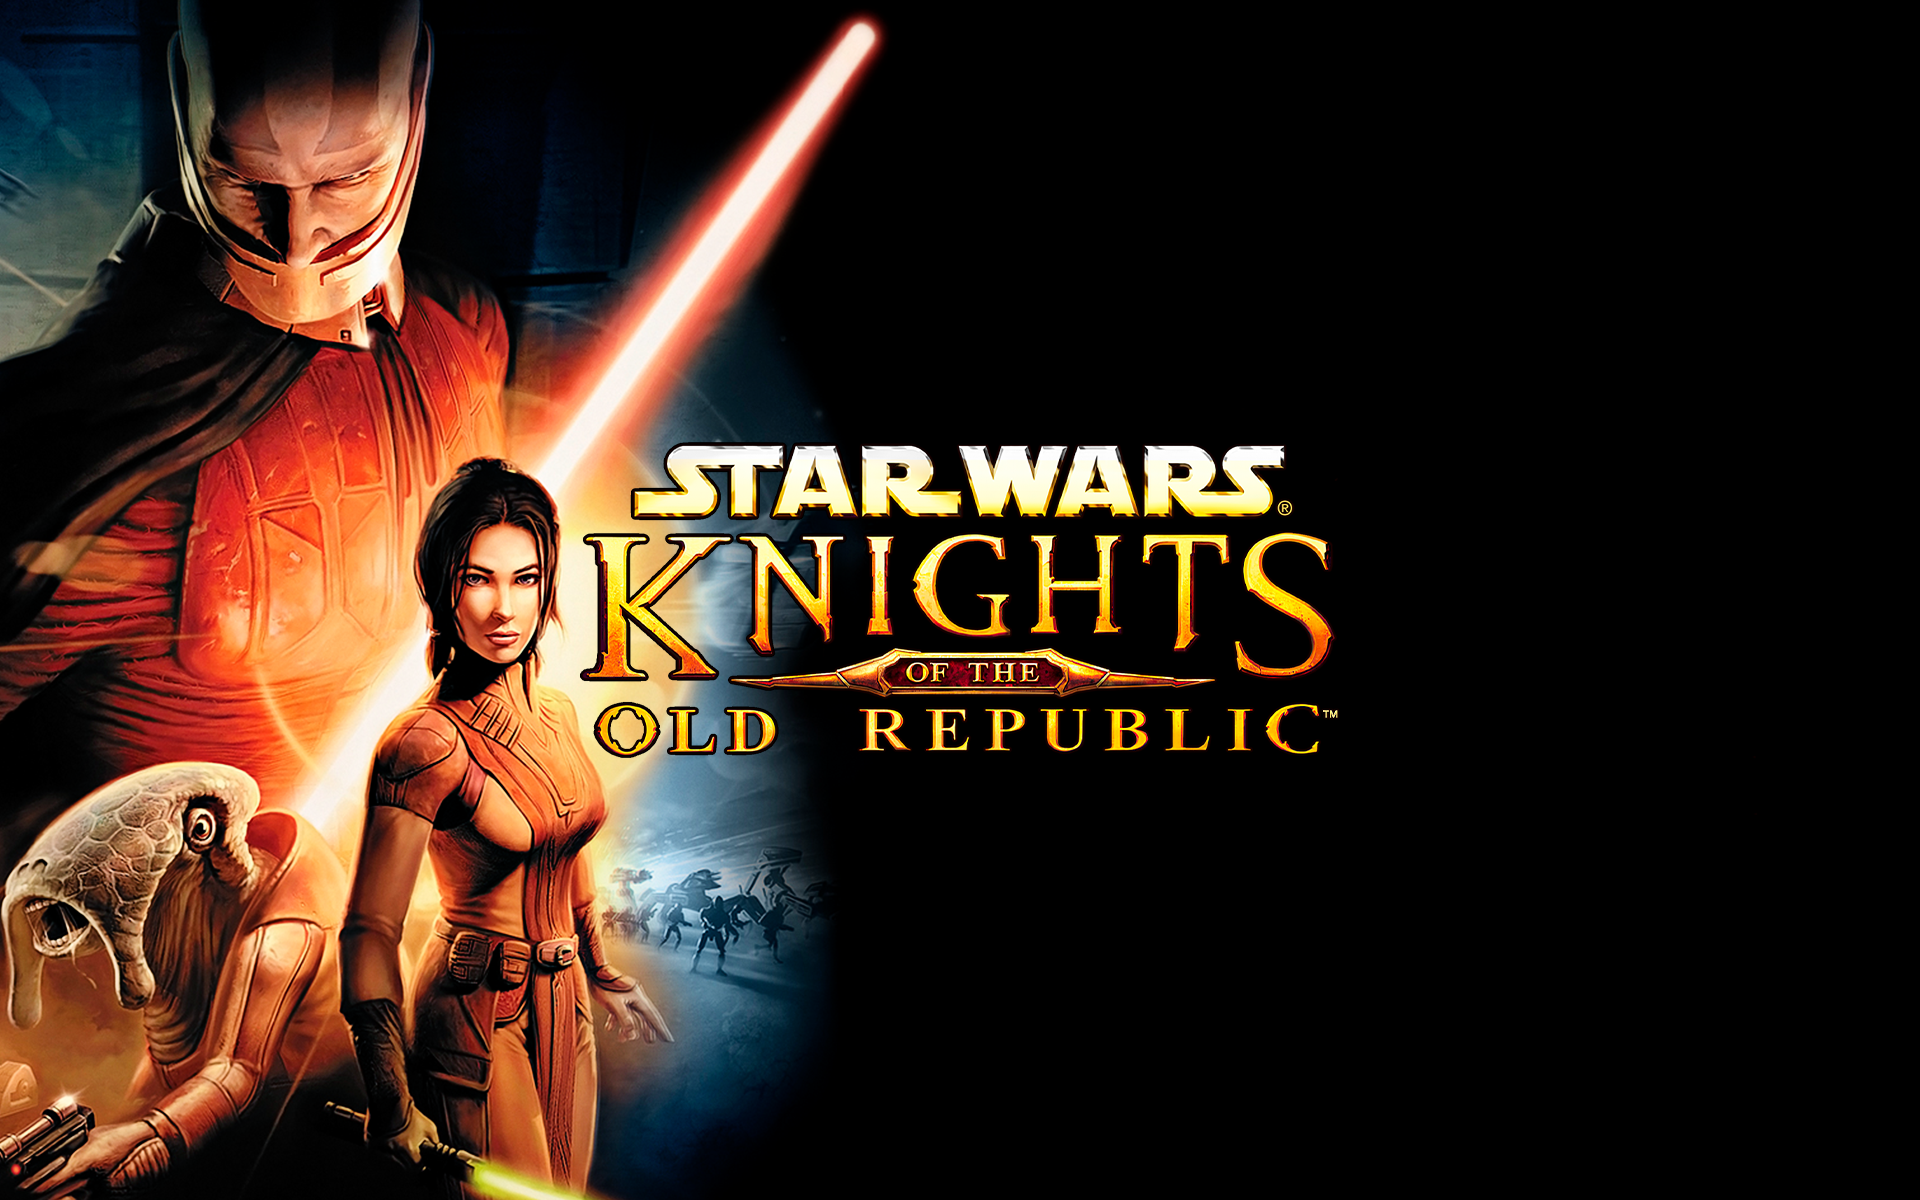 Expansões de Star Wars: The Old Republic podem ser jogadas